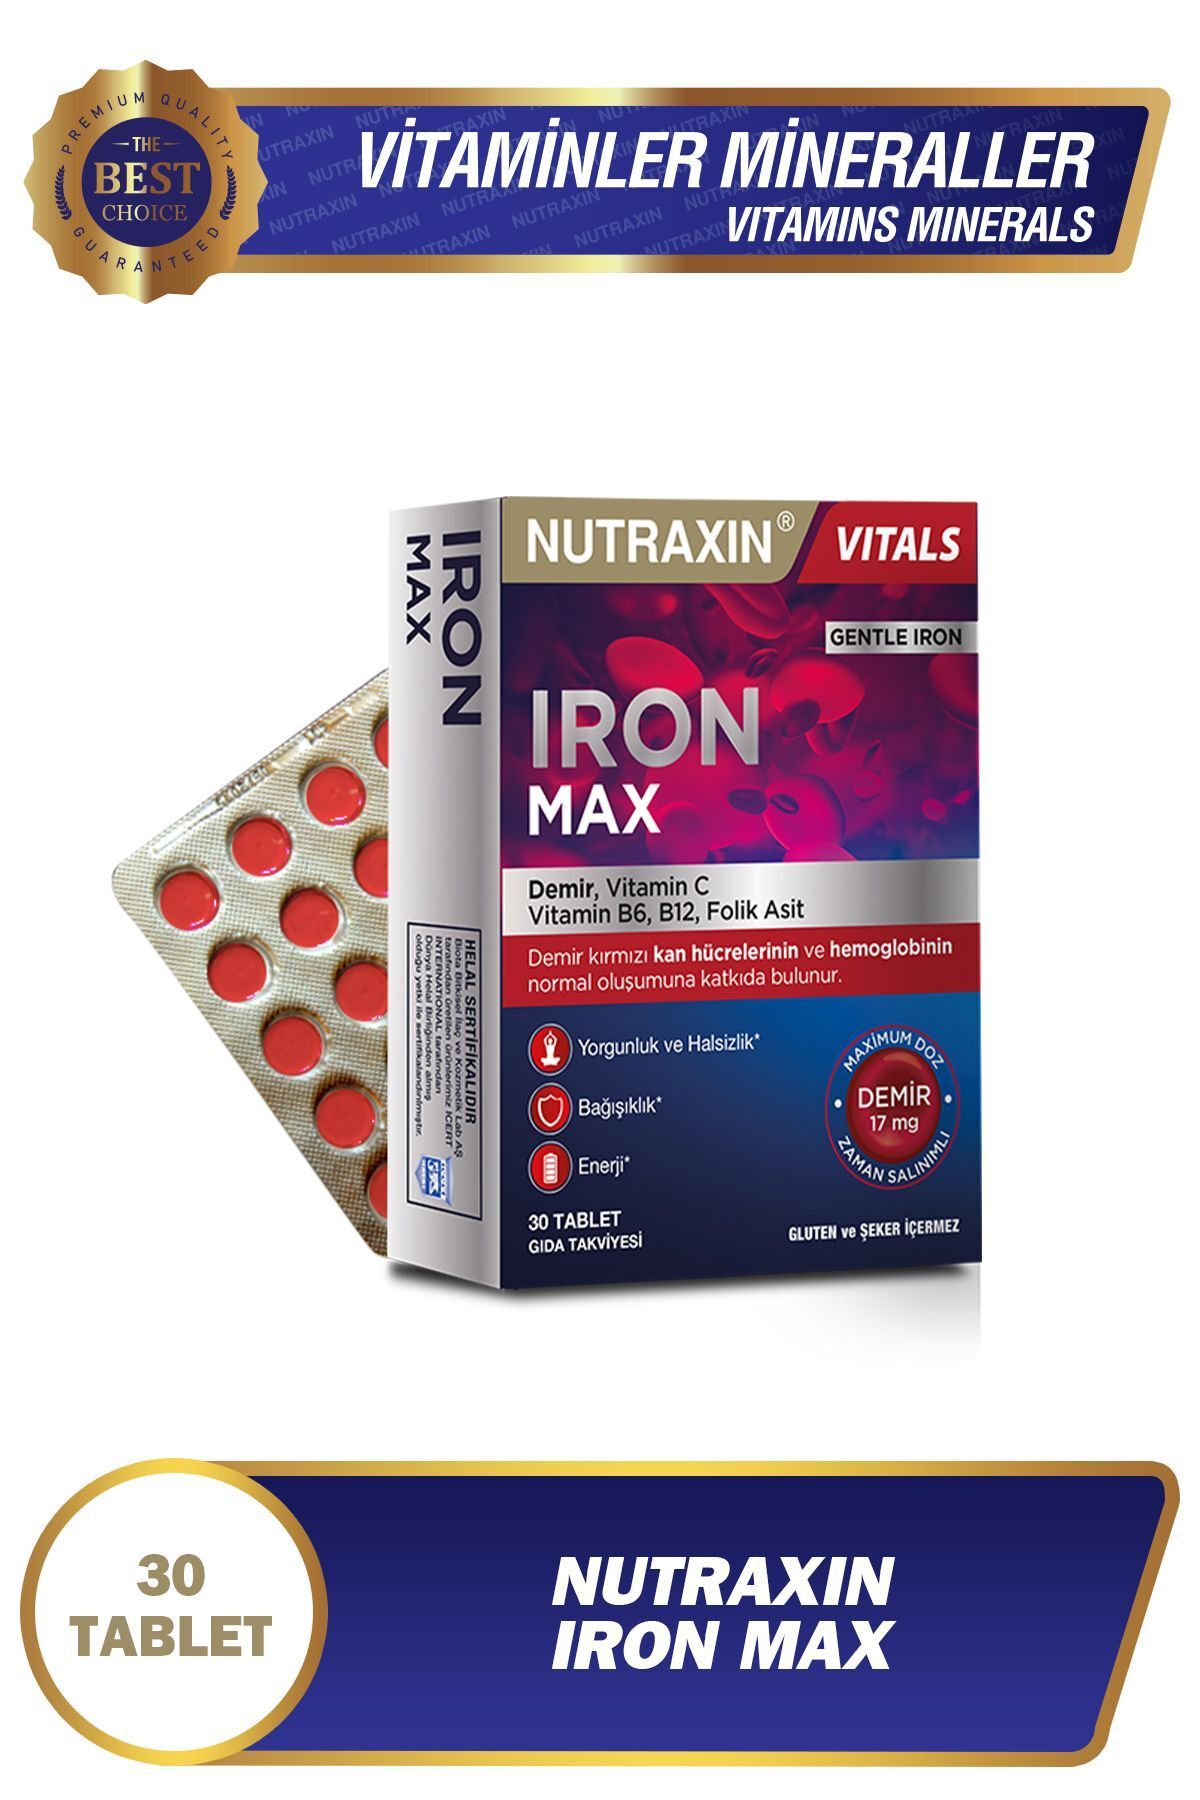 Nutraxin Iron Max 30 Tablet - Demir, Vitamin C, B6, Folik Asit, B12